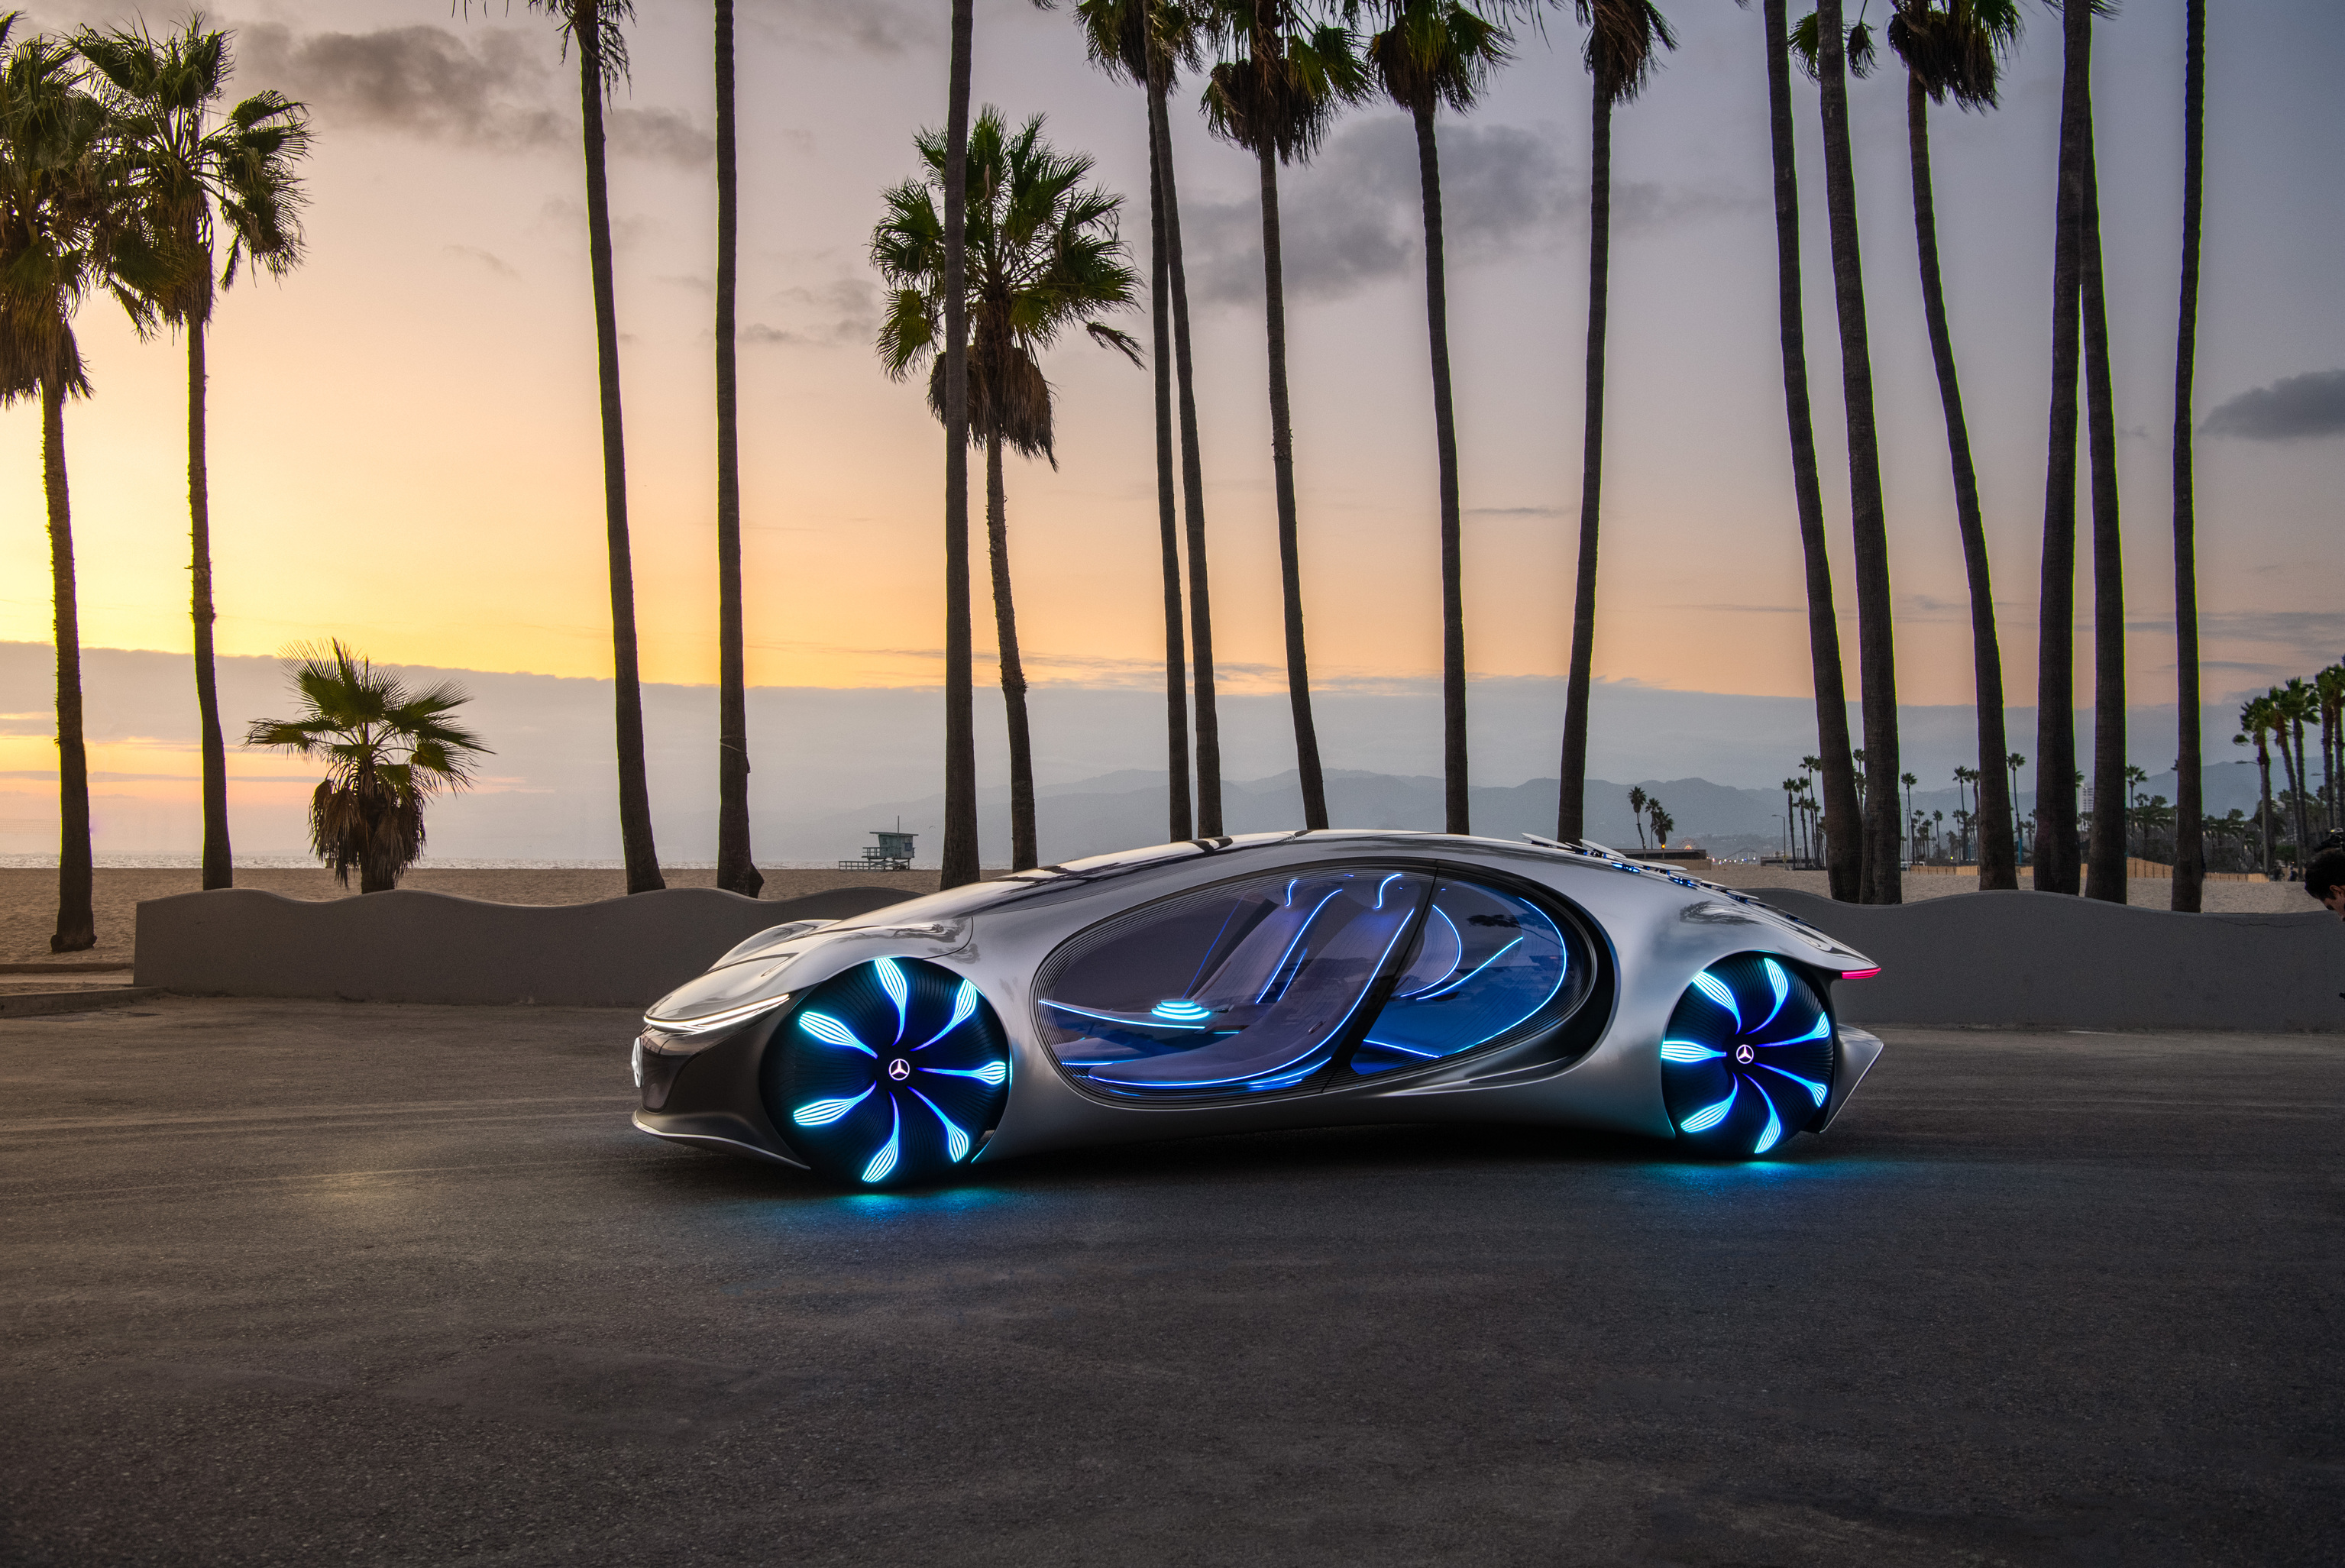 THE SUPERB CONCEPT CARS FROM FUTURE 创建发想 ╳ 预览未来 以梦想雕琢的概念车